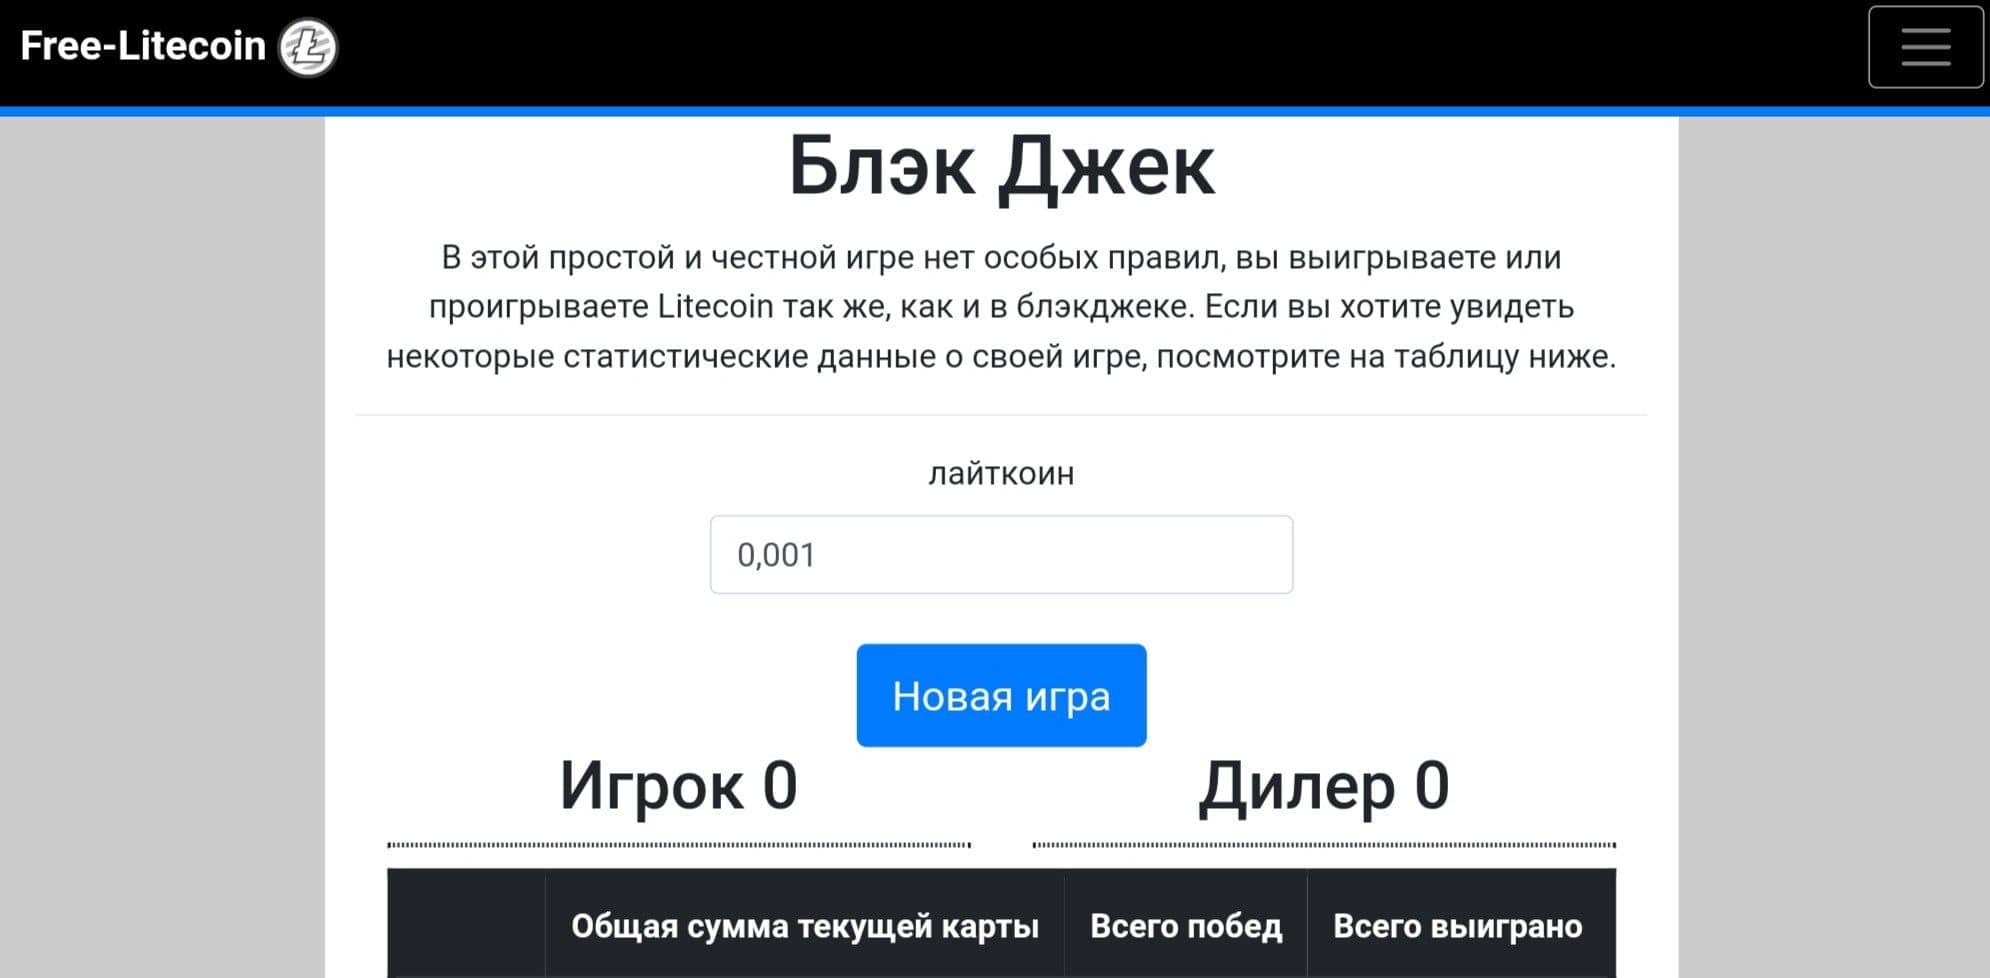 Free Litecoin платформа